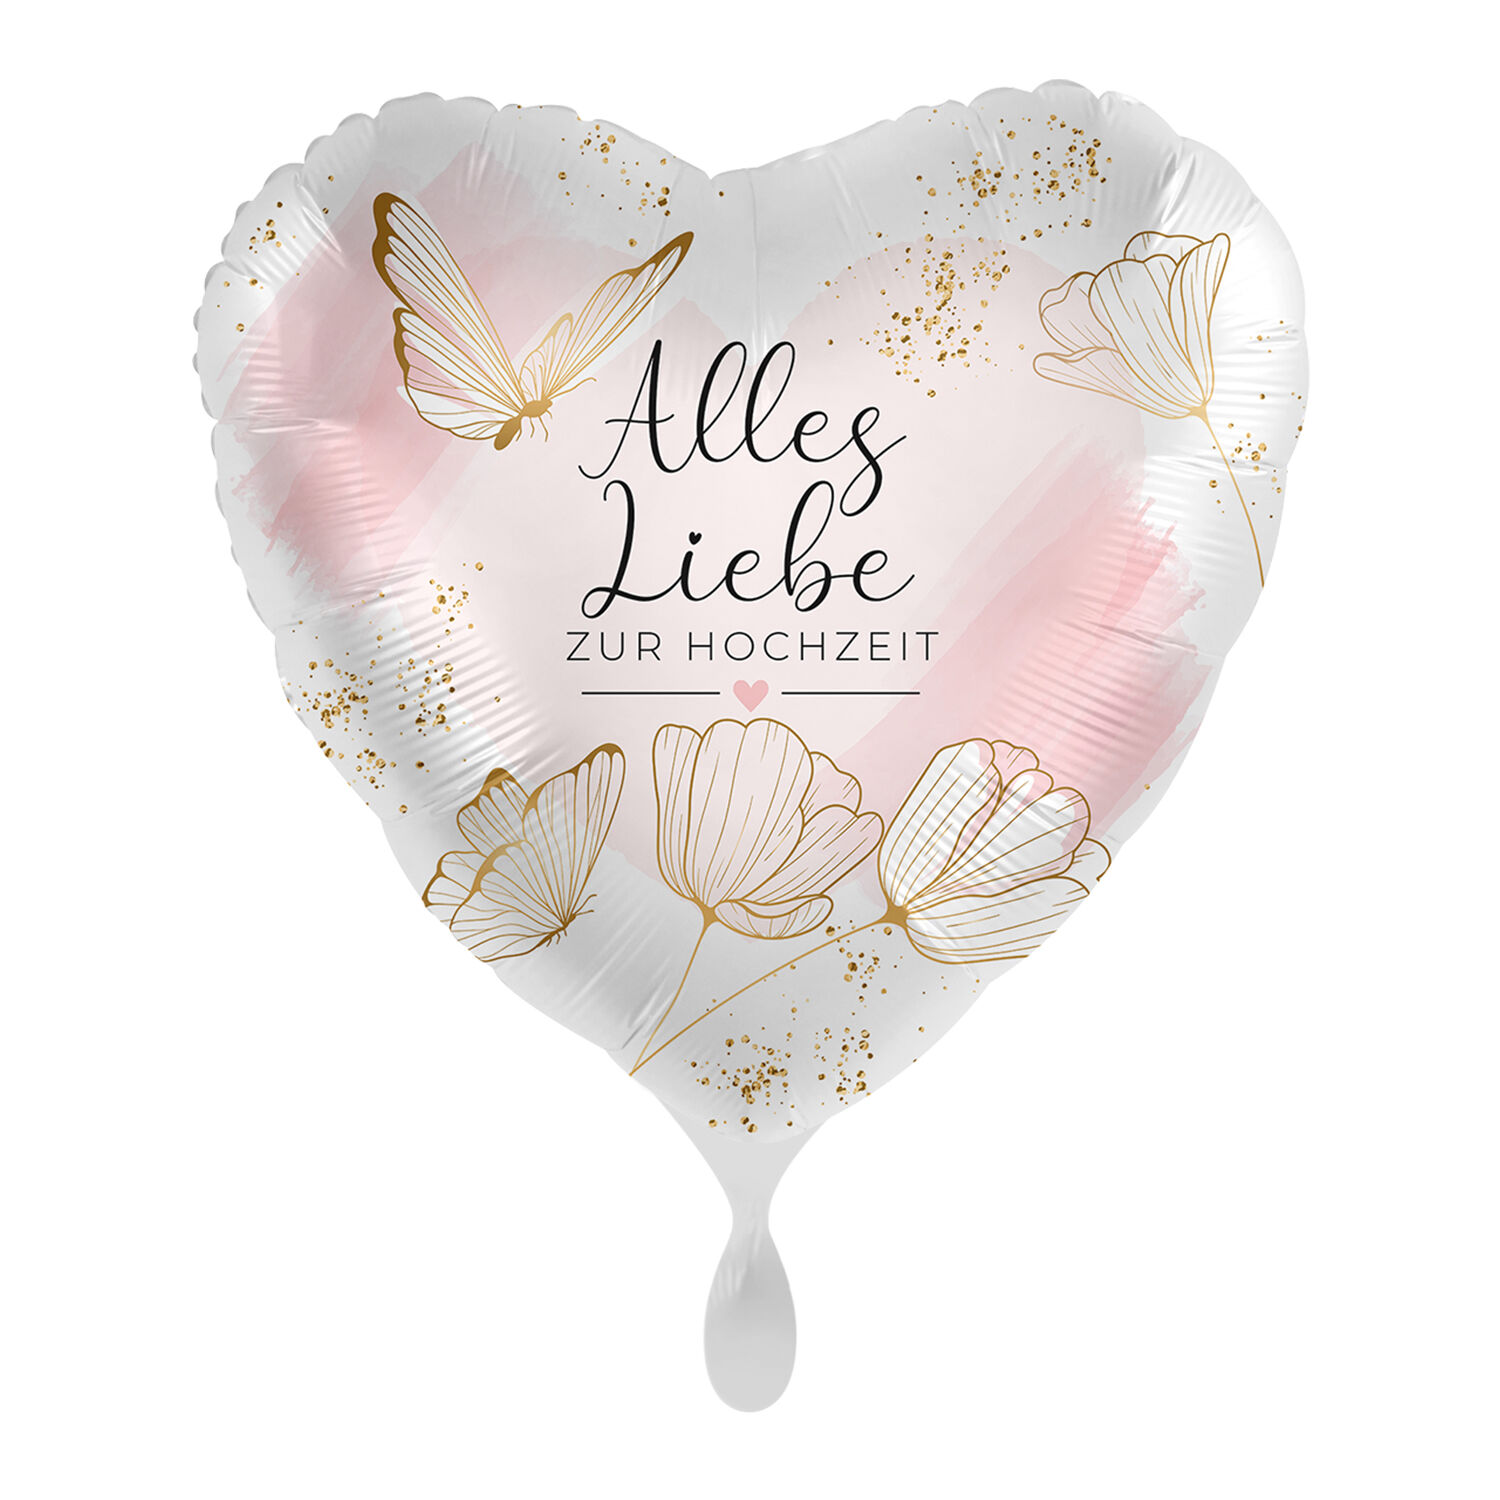 NEU Folienballon - Alles Liebe zur Hochzeit - ca. 45cm Durchmesser